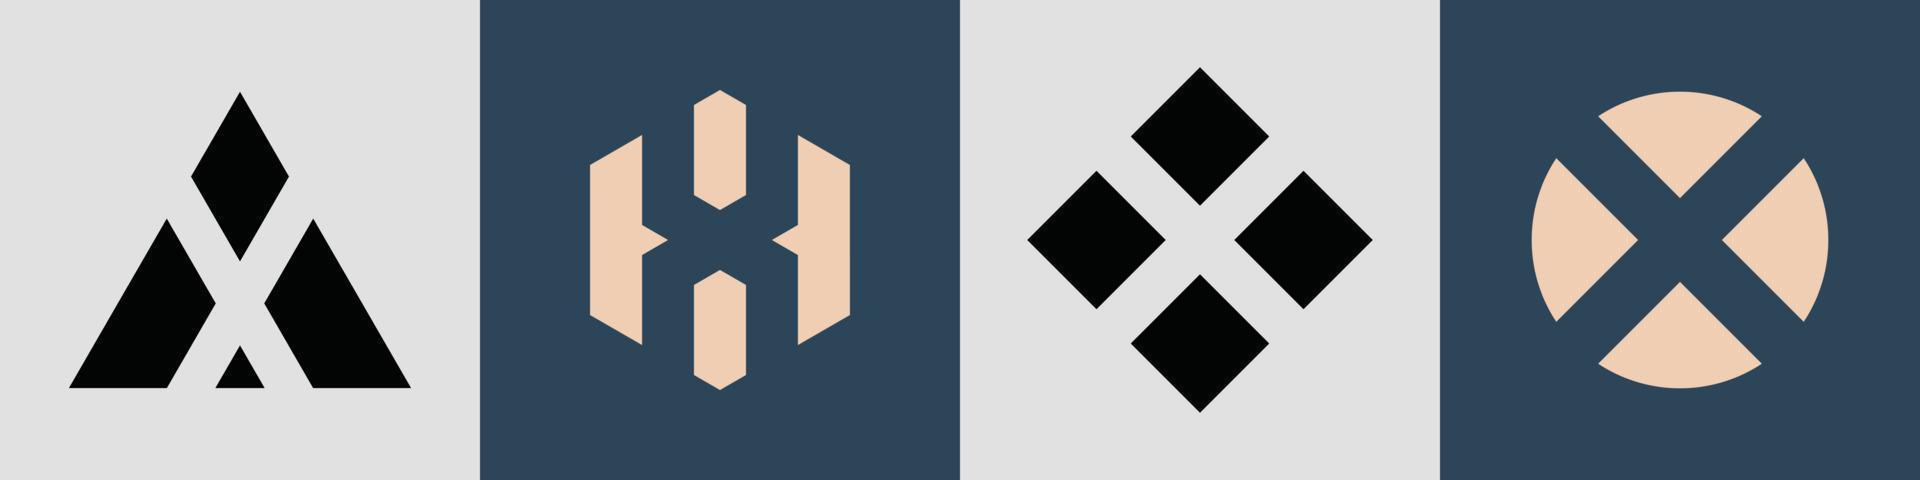 kreative einfache anfangsbuchstaben x logo-designs paket. vektor